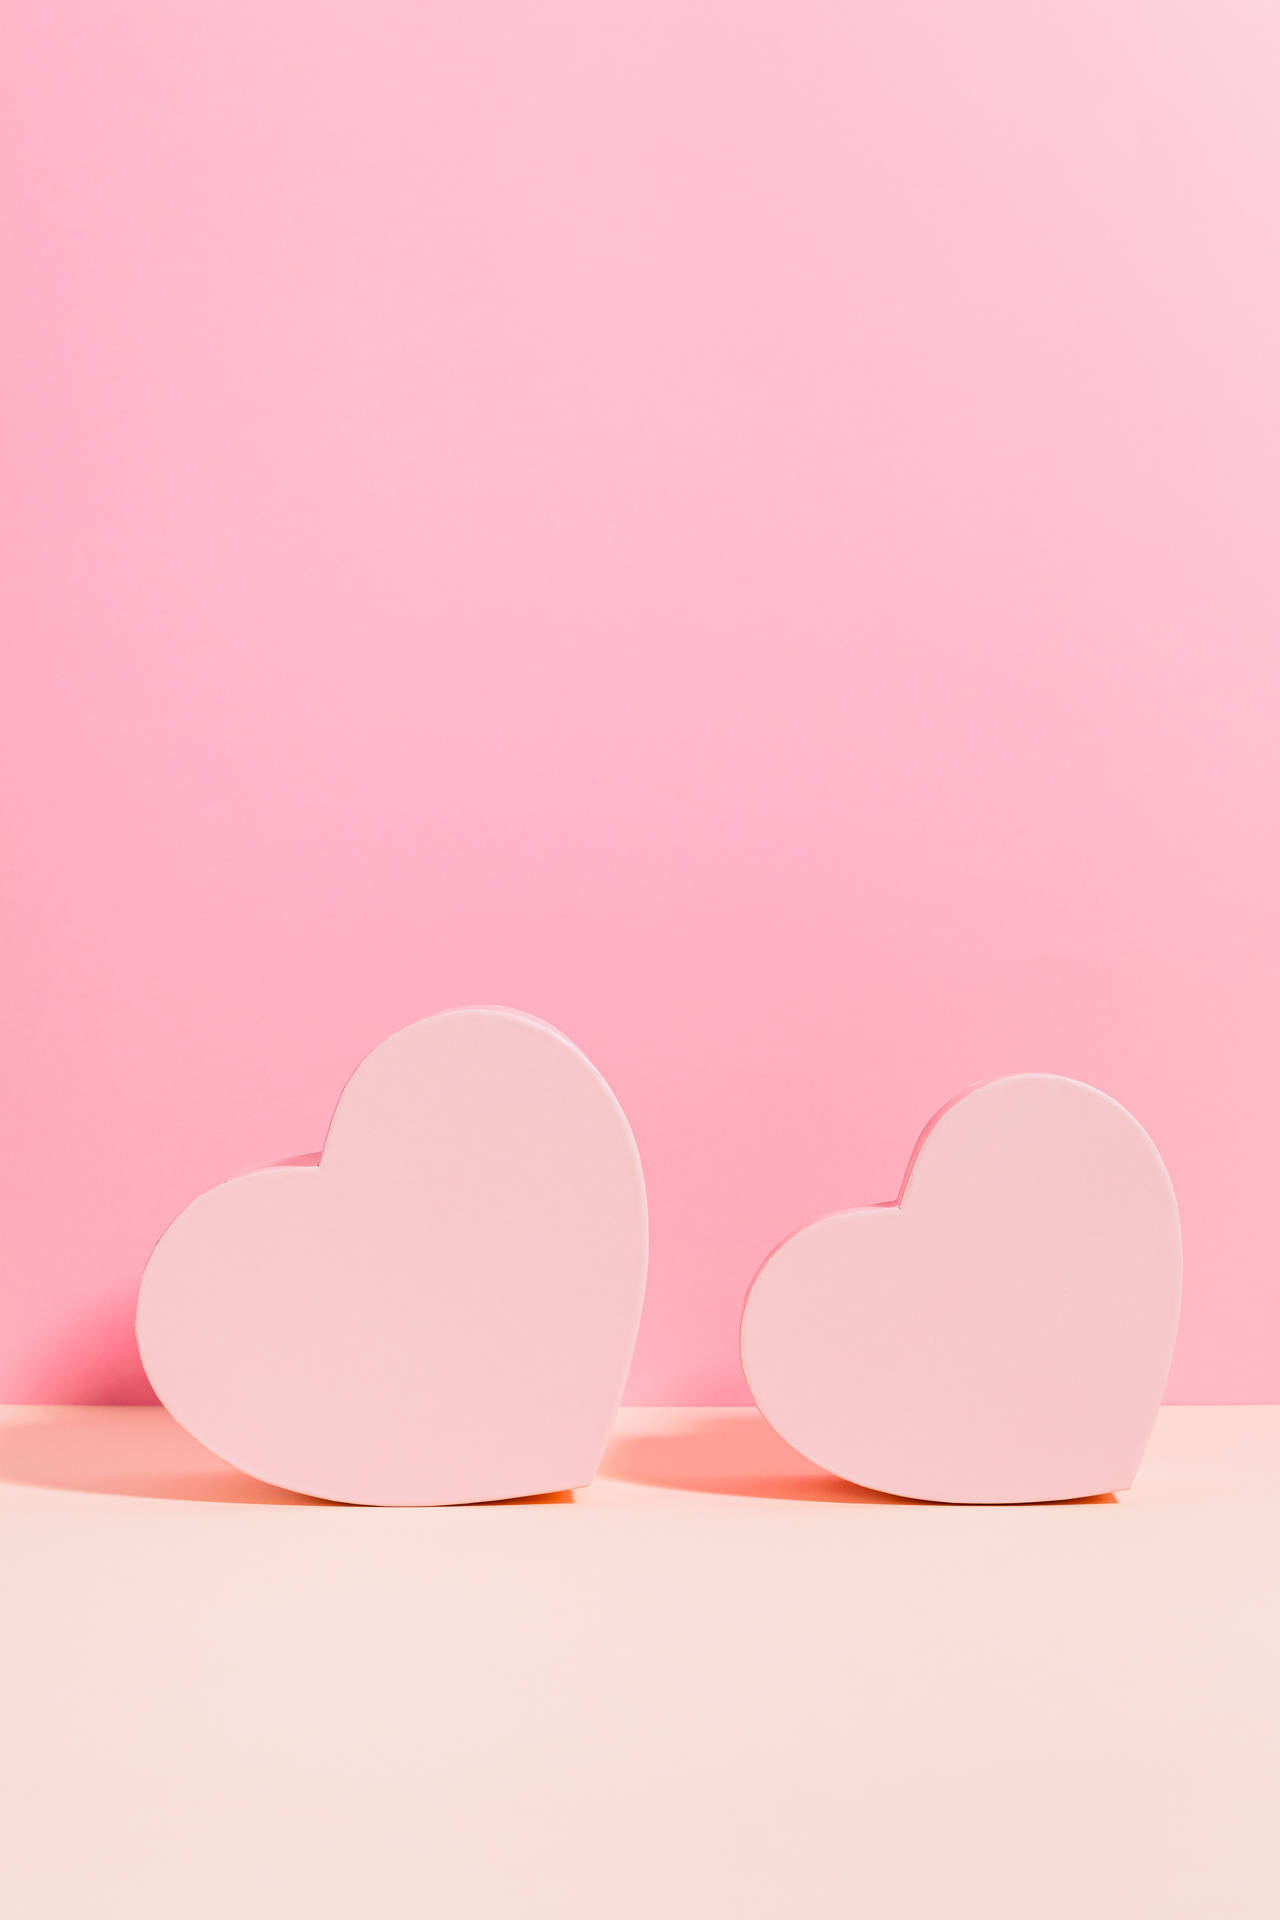 Pastel Pink Heart Boxes Wallpaper